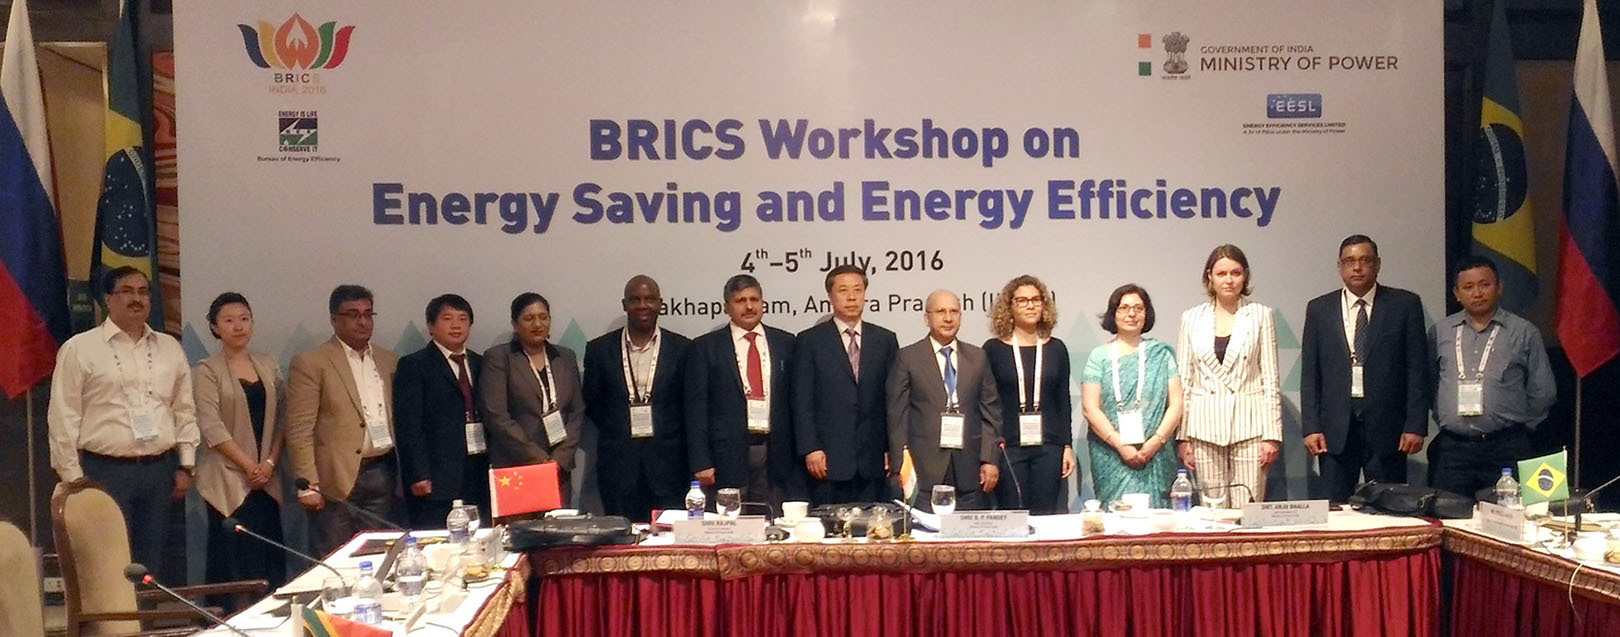 BRICS’ meeting on energy efficiency began Monday